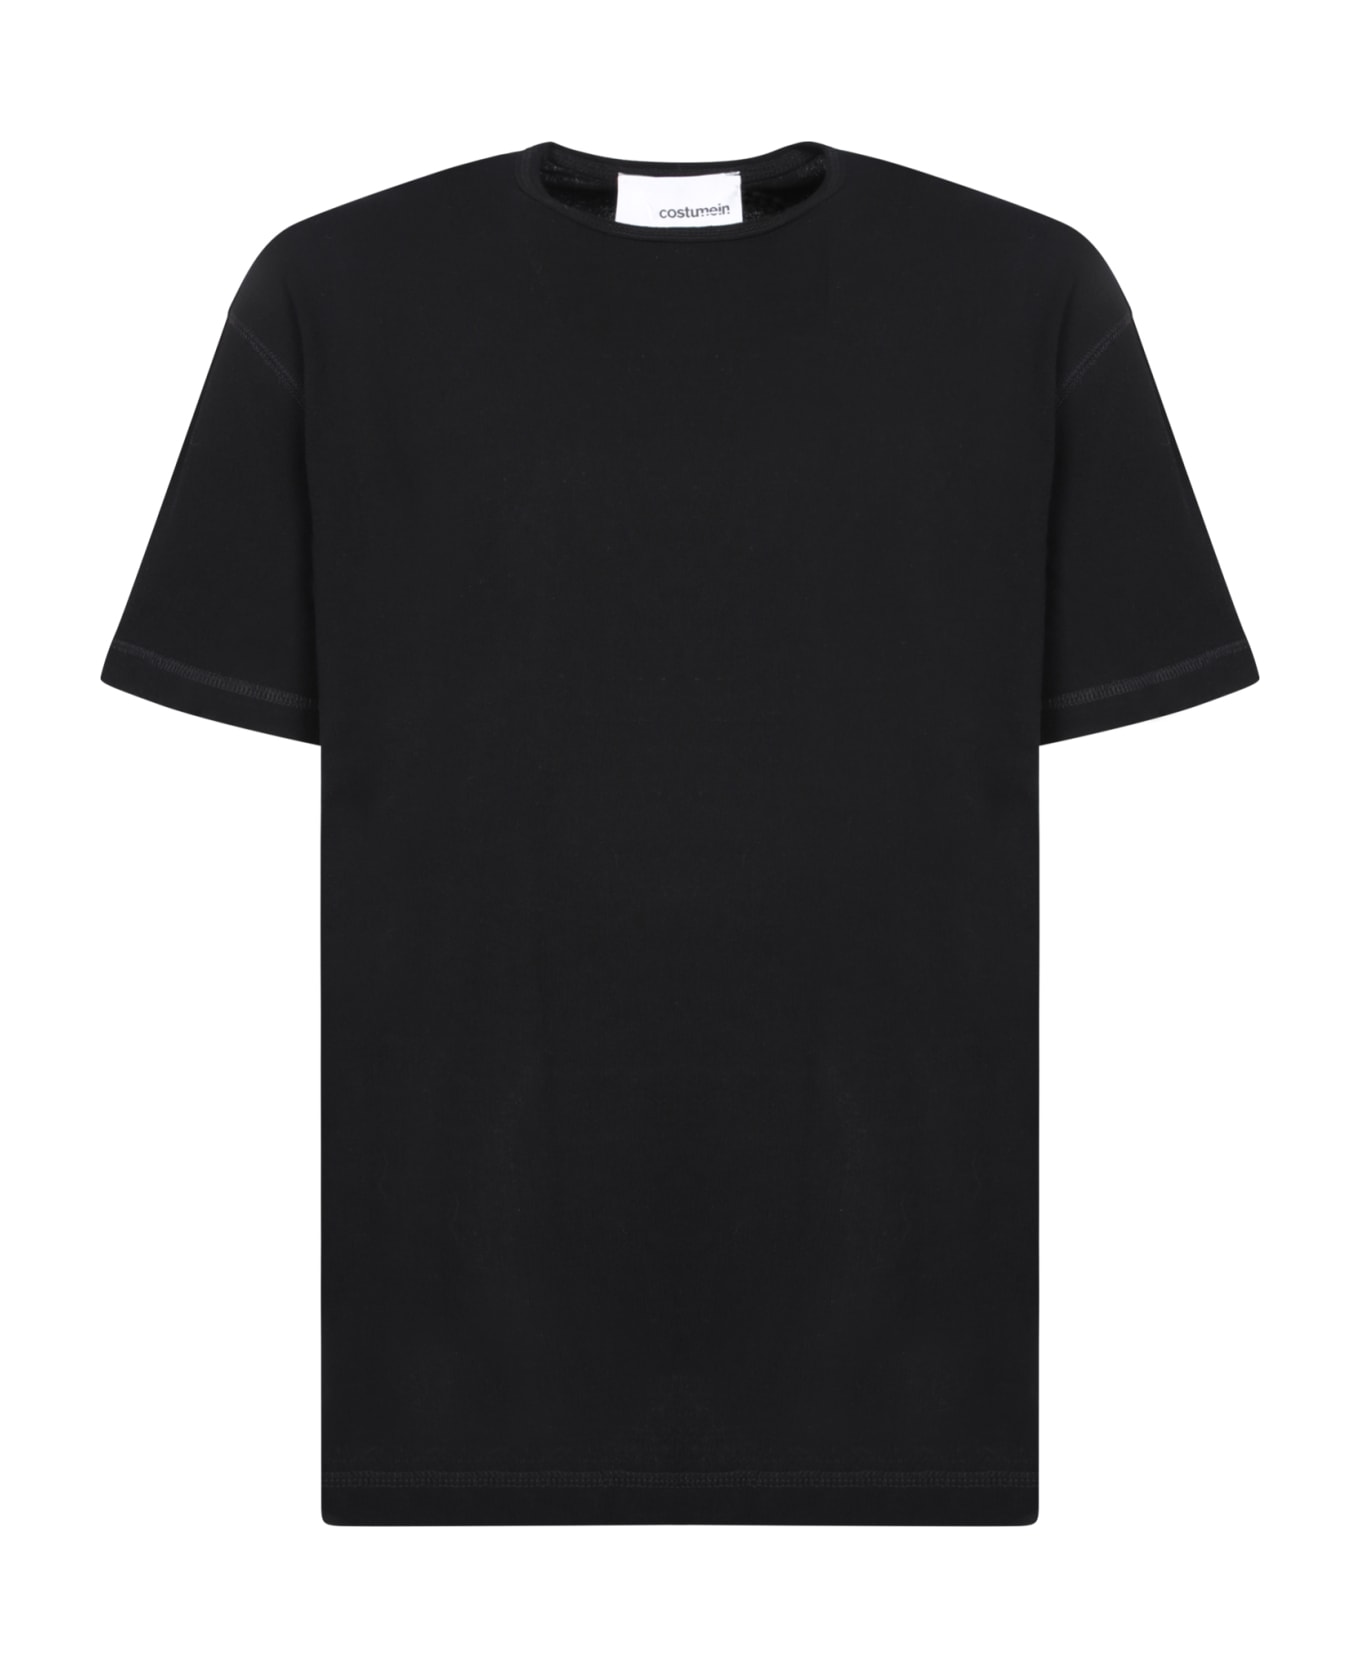 costumein Liam Black Cotton T-shirt - Black